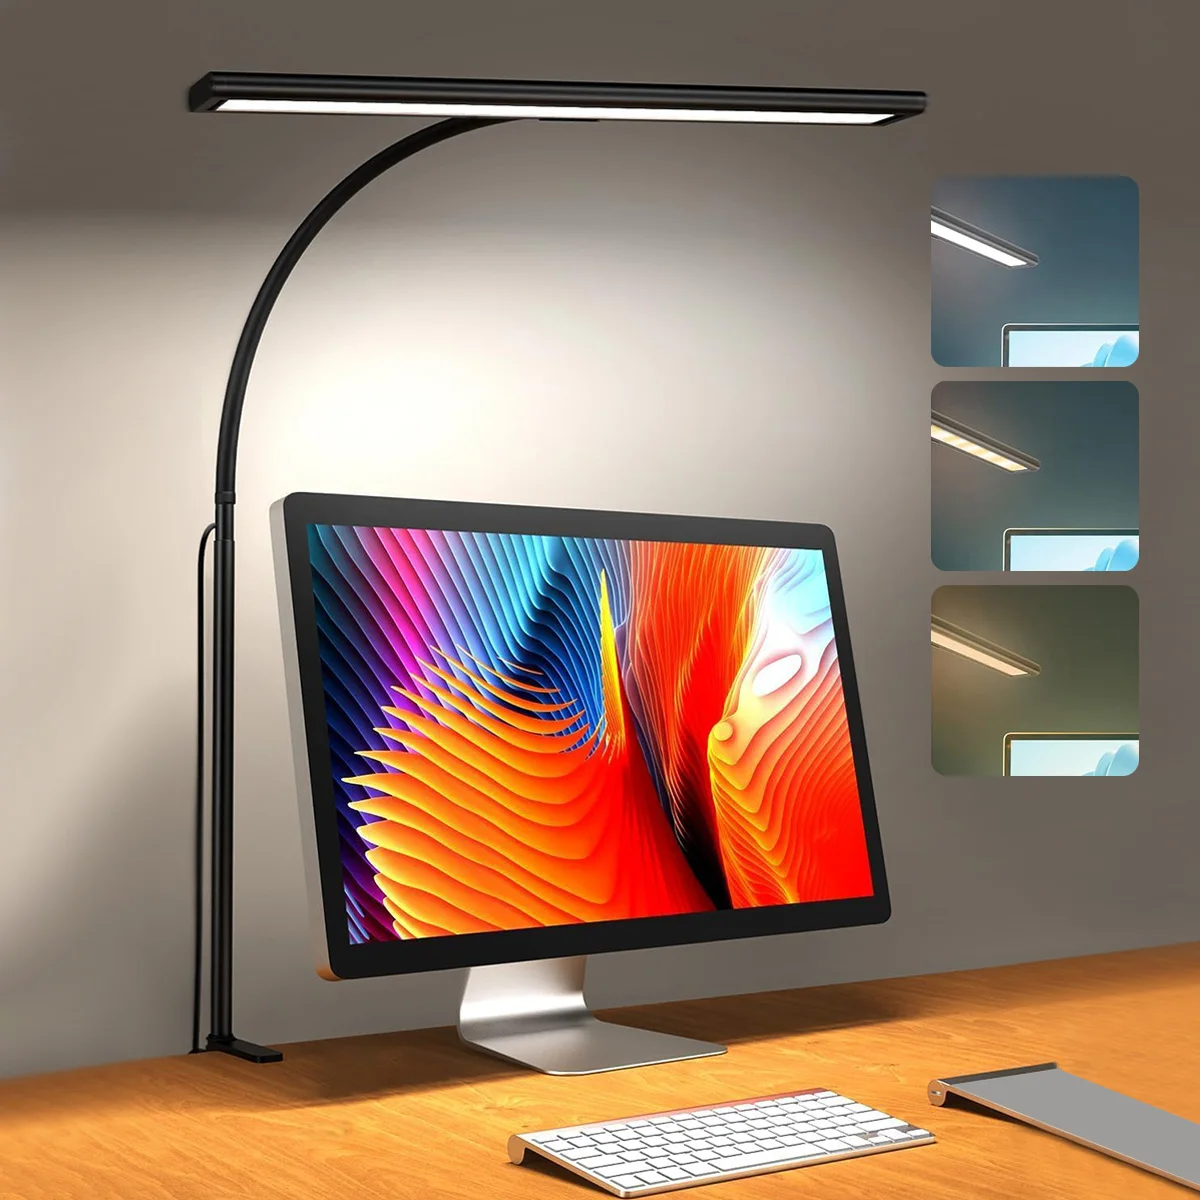 P remote control computer desk light bright desktop light adjustable gooseneck dimmable thumb200